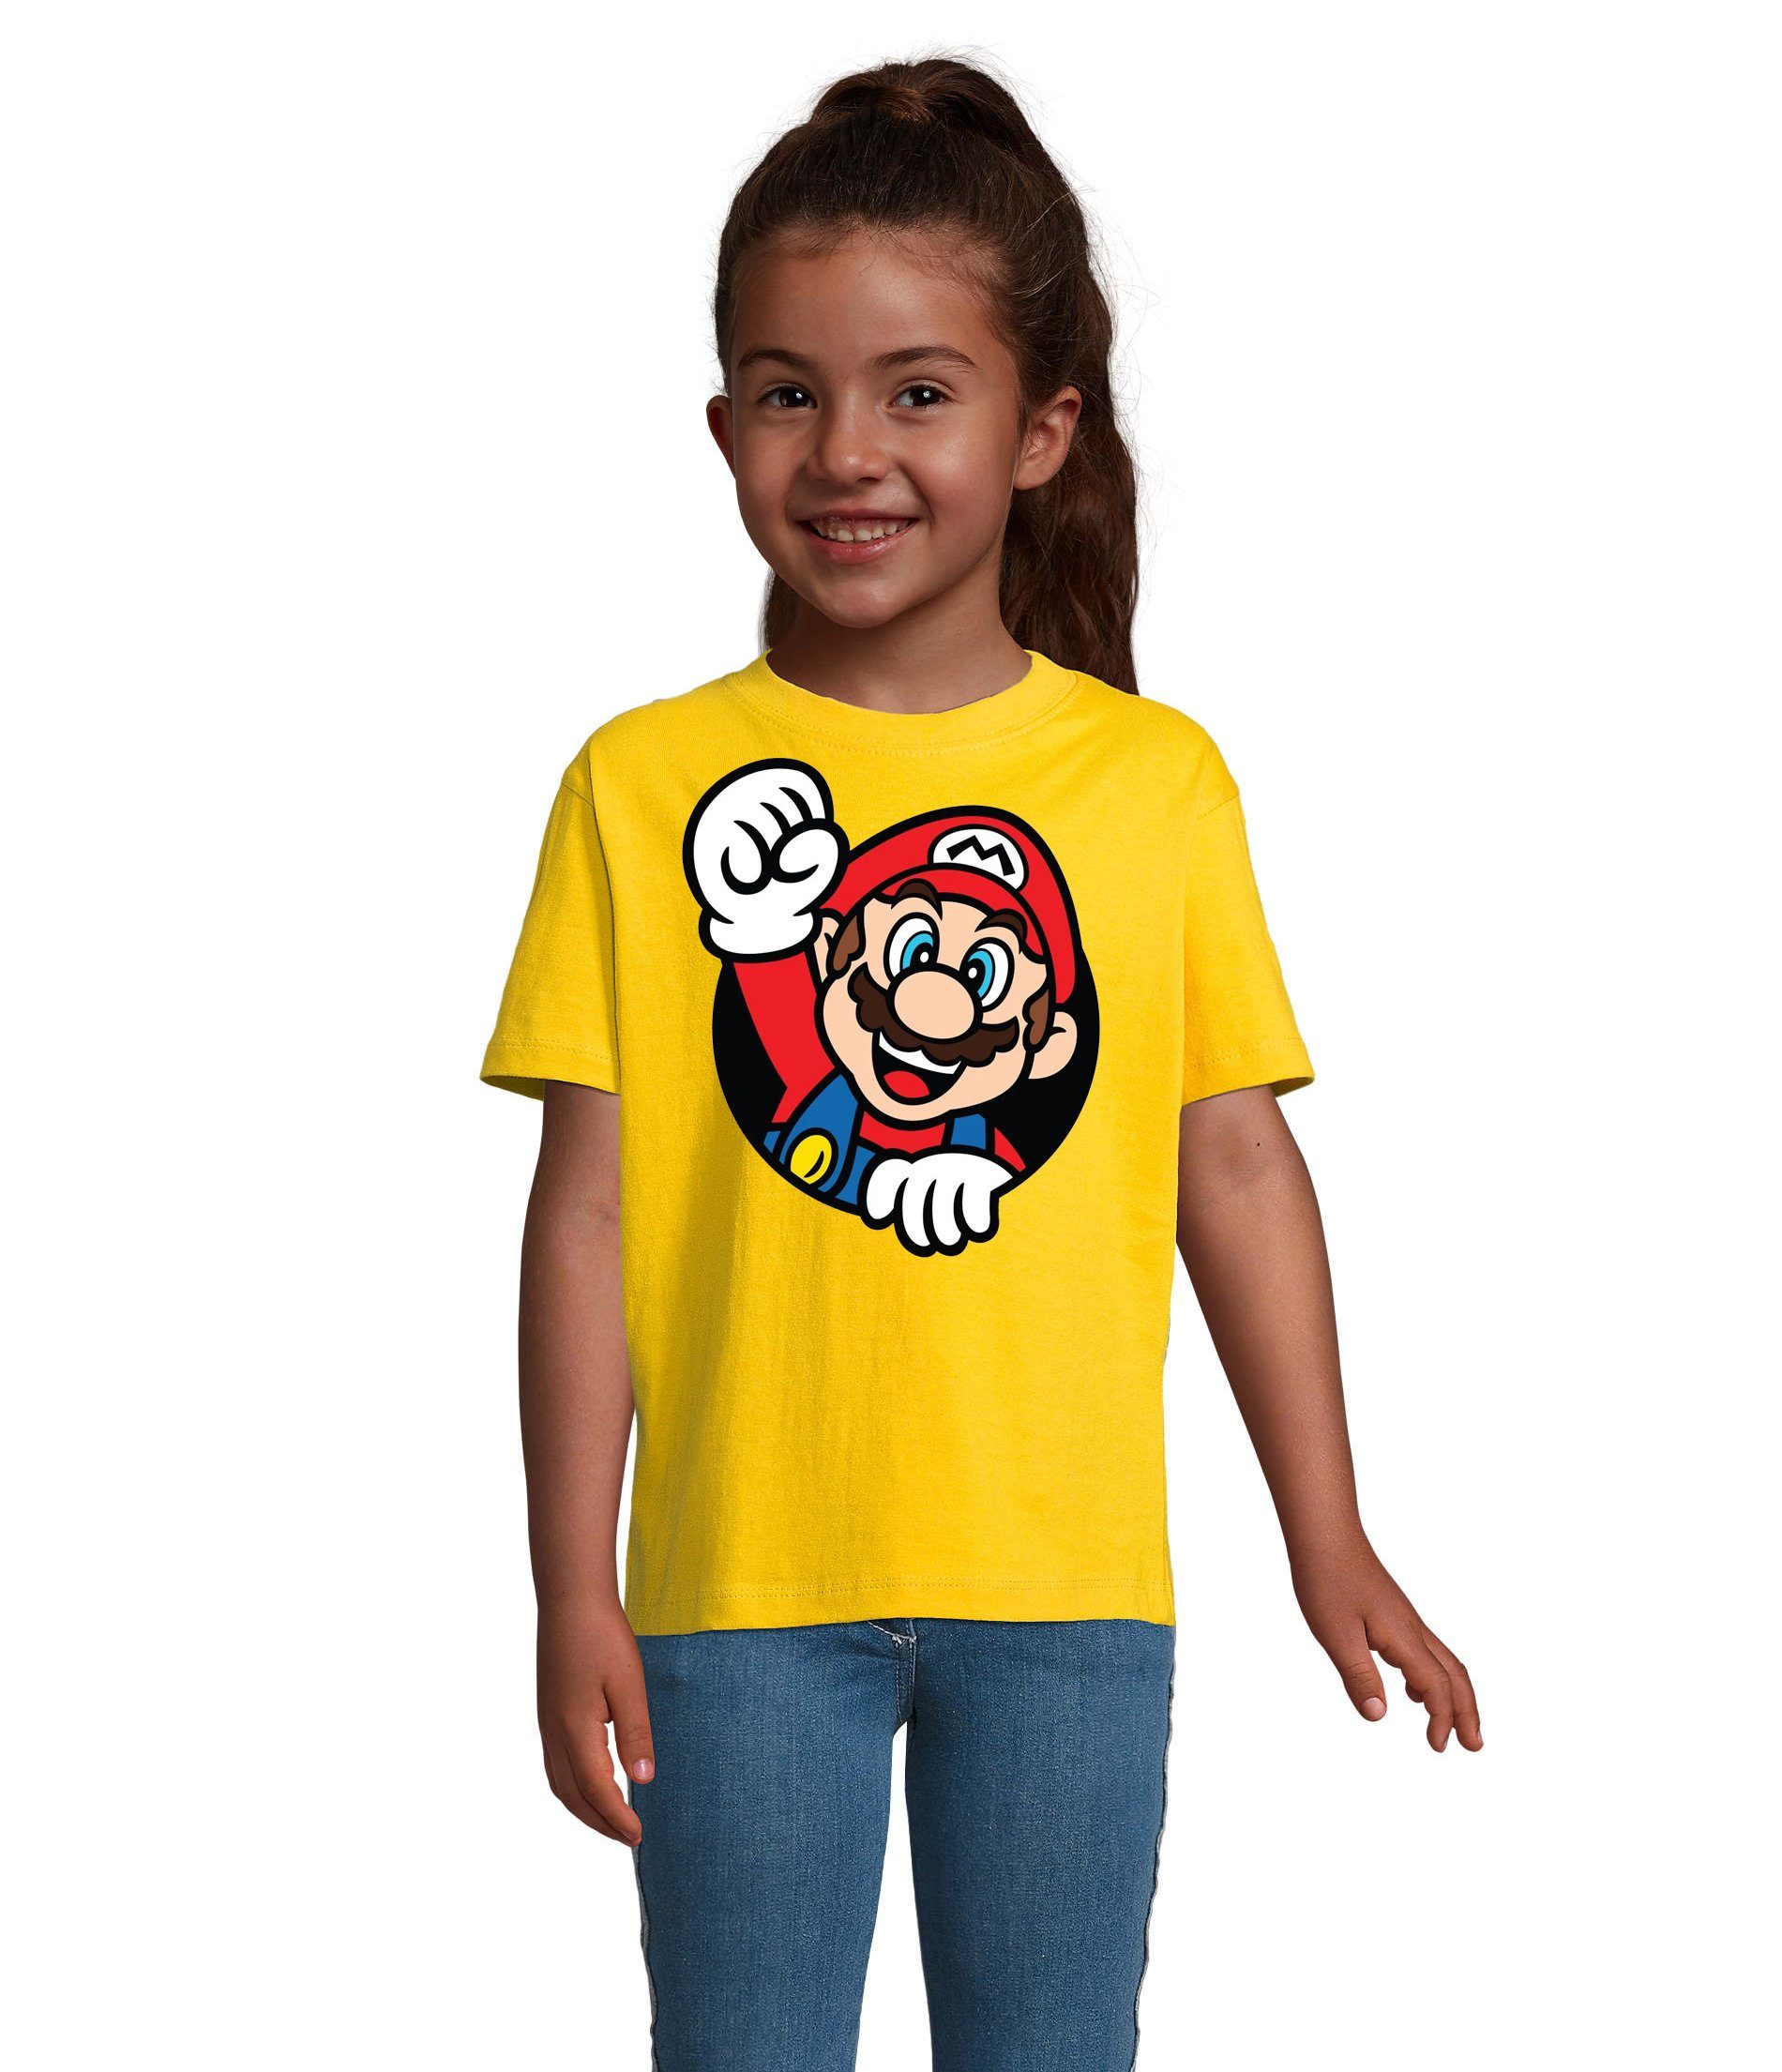 Blondie & Brownie T-Shirt Kinder Super Mario Faust Nerd Konsole Gaming Spiel Nintendo Konsole Gelb